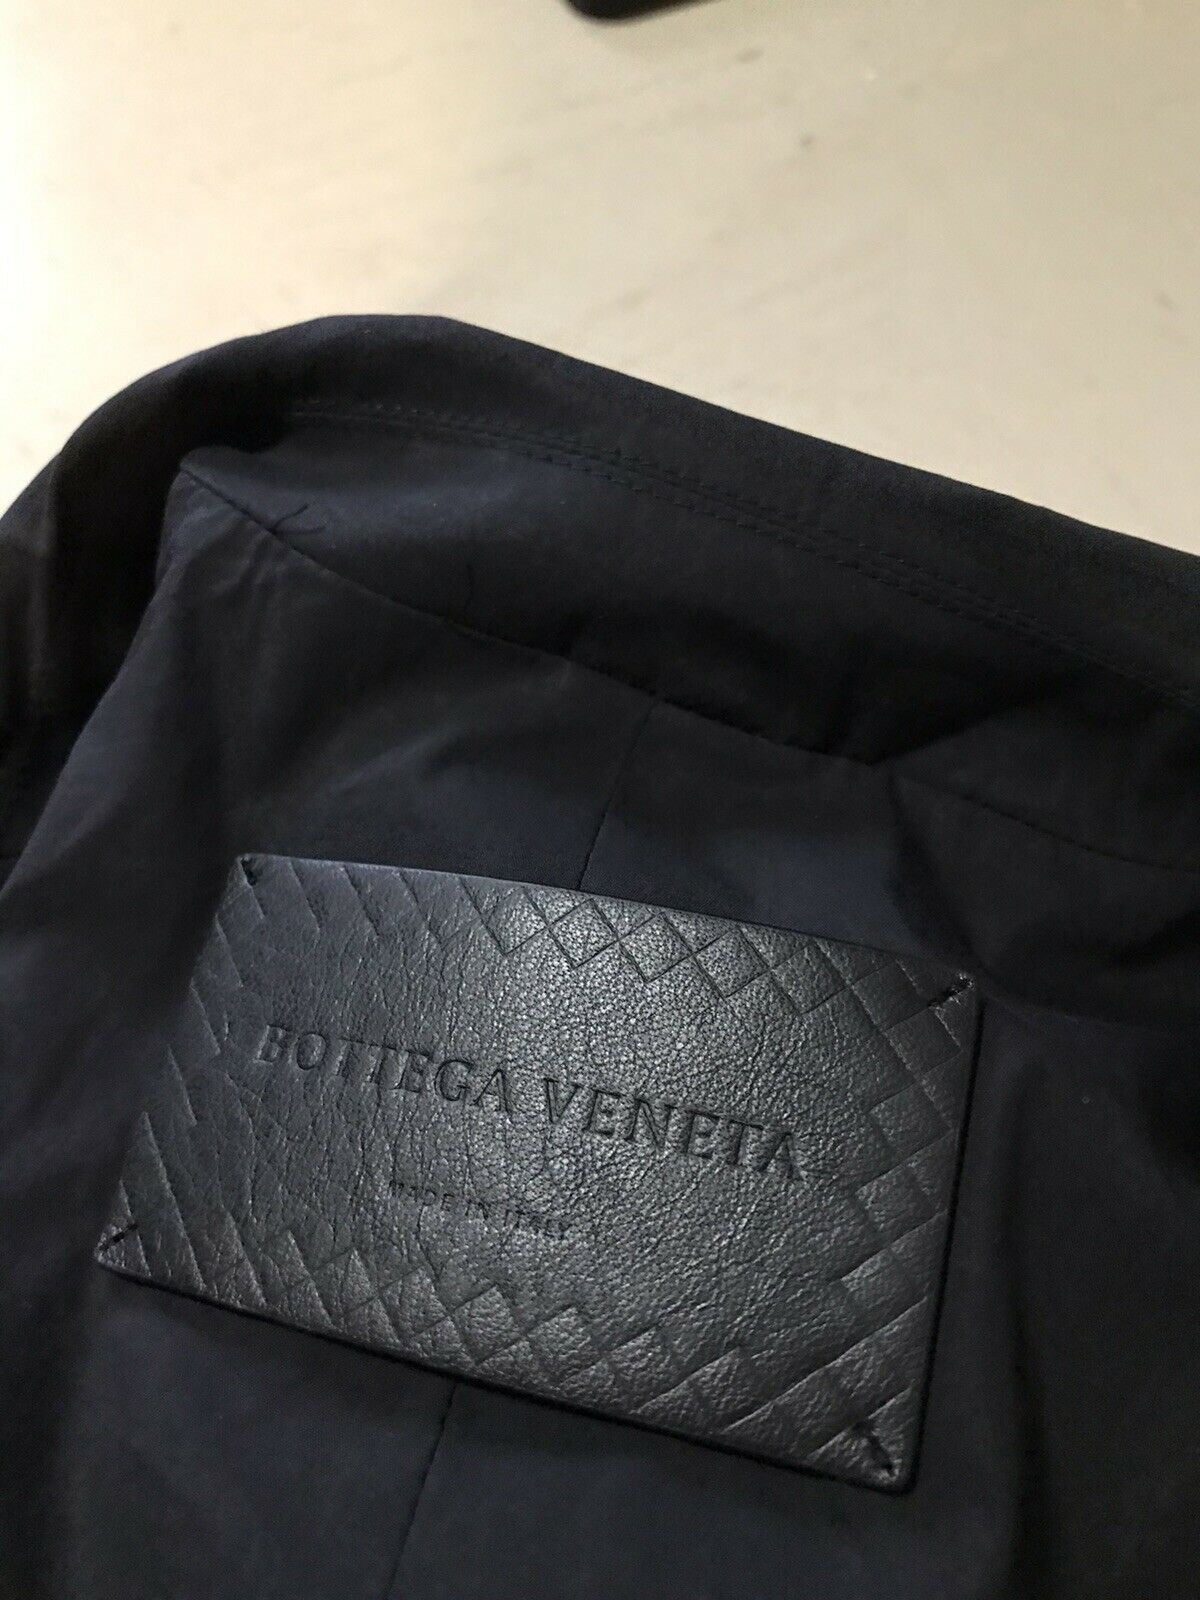 New $1300 Bottega Veneta Men’s Jacket Blazer Black 38 US ( 48 Eu ) Italy